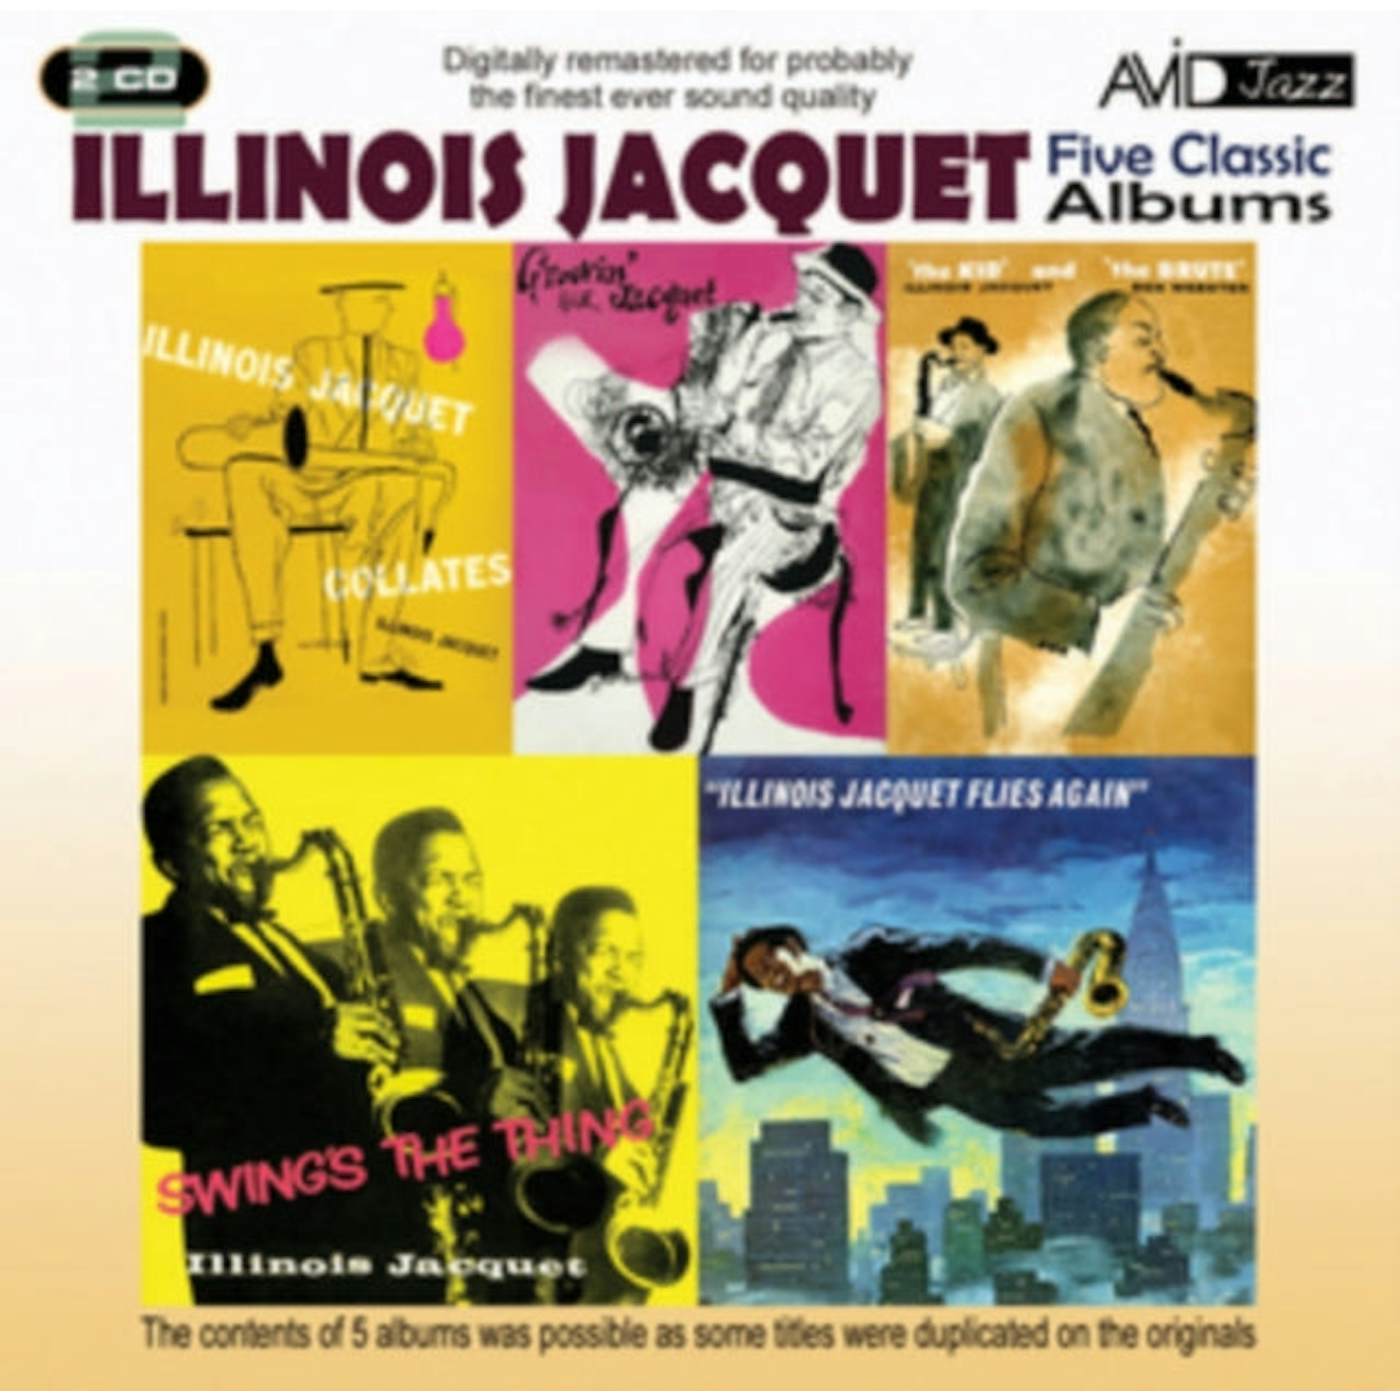 Illinois Jacquet CD - Five Classic Albums (The Kid And The Brute / Swing's The Thing / Illinois Jacquet Flies Again / Illinois Jacquet Collates / Groovin' With Jacquet)